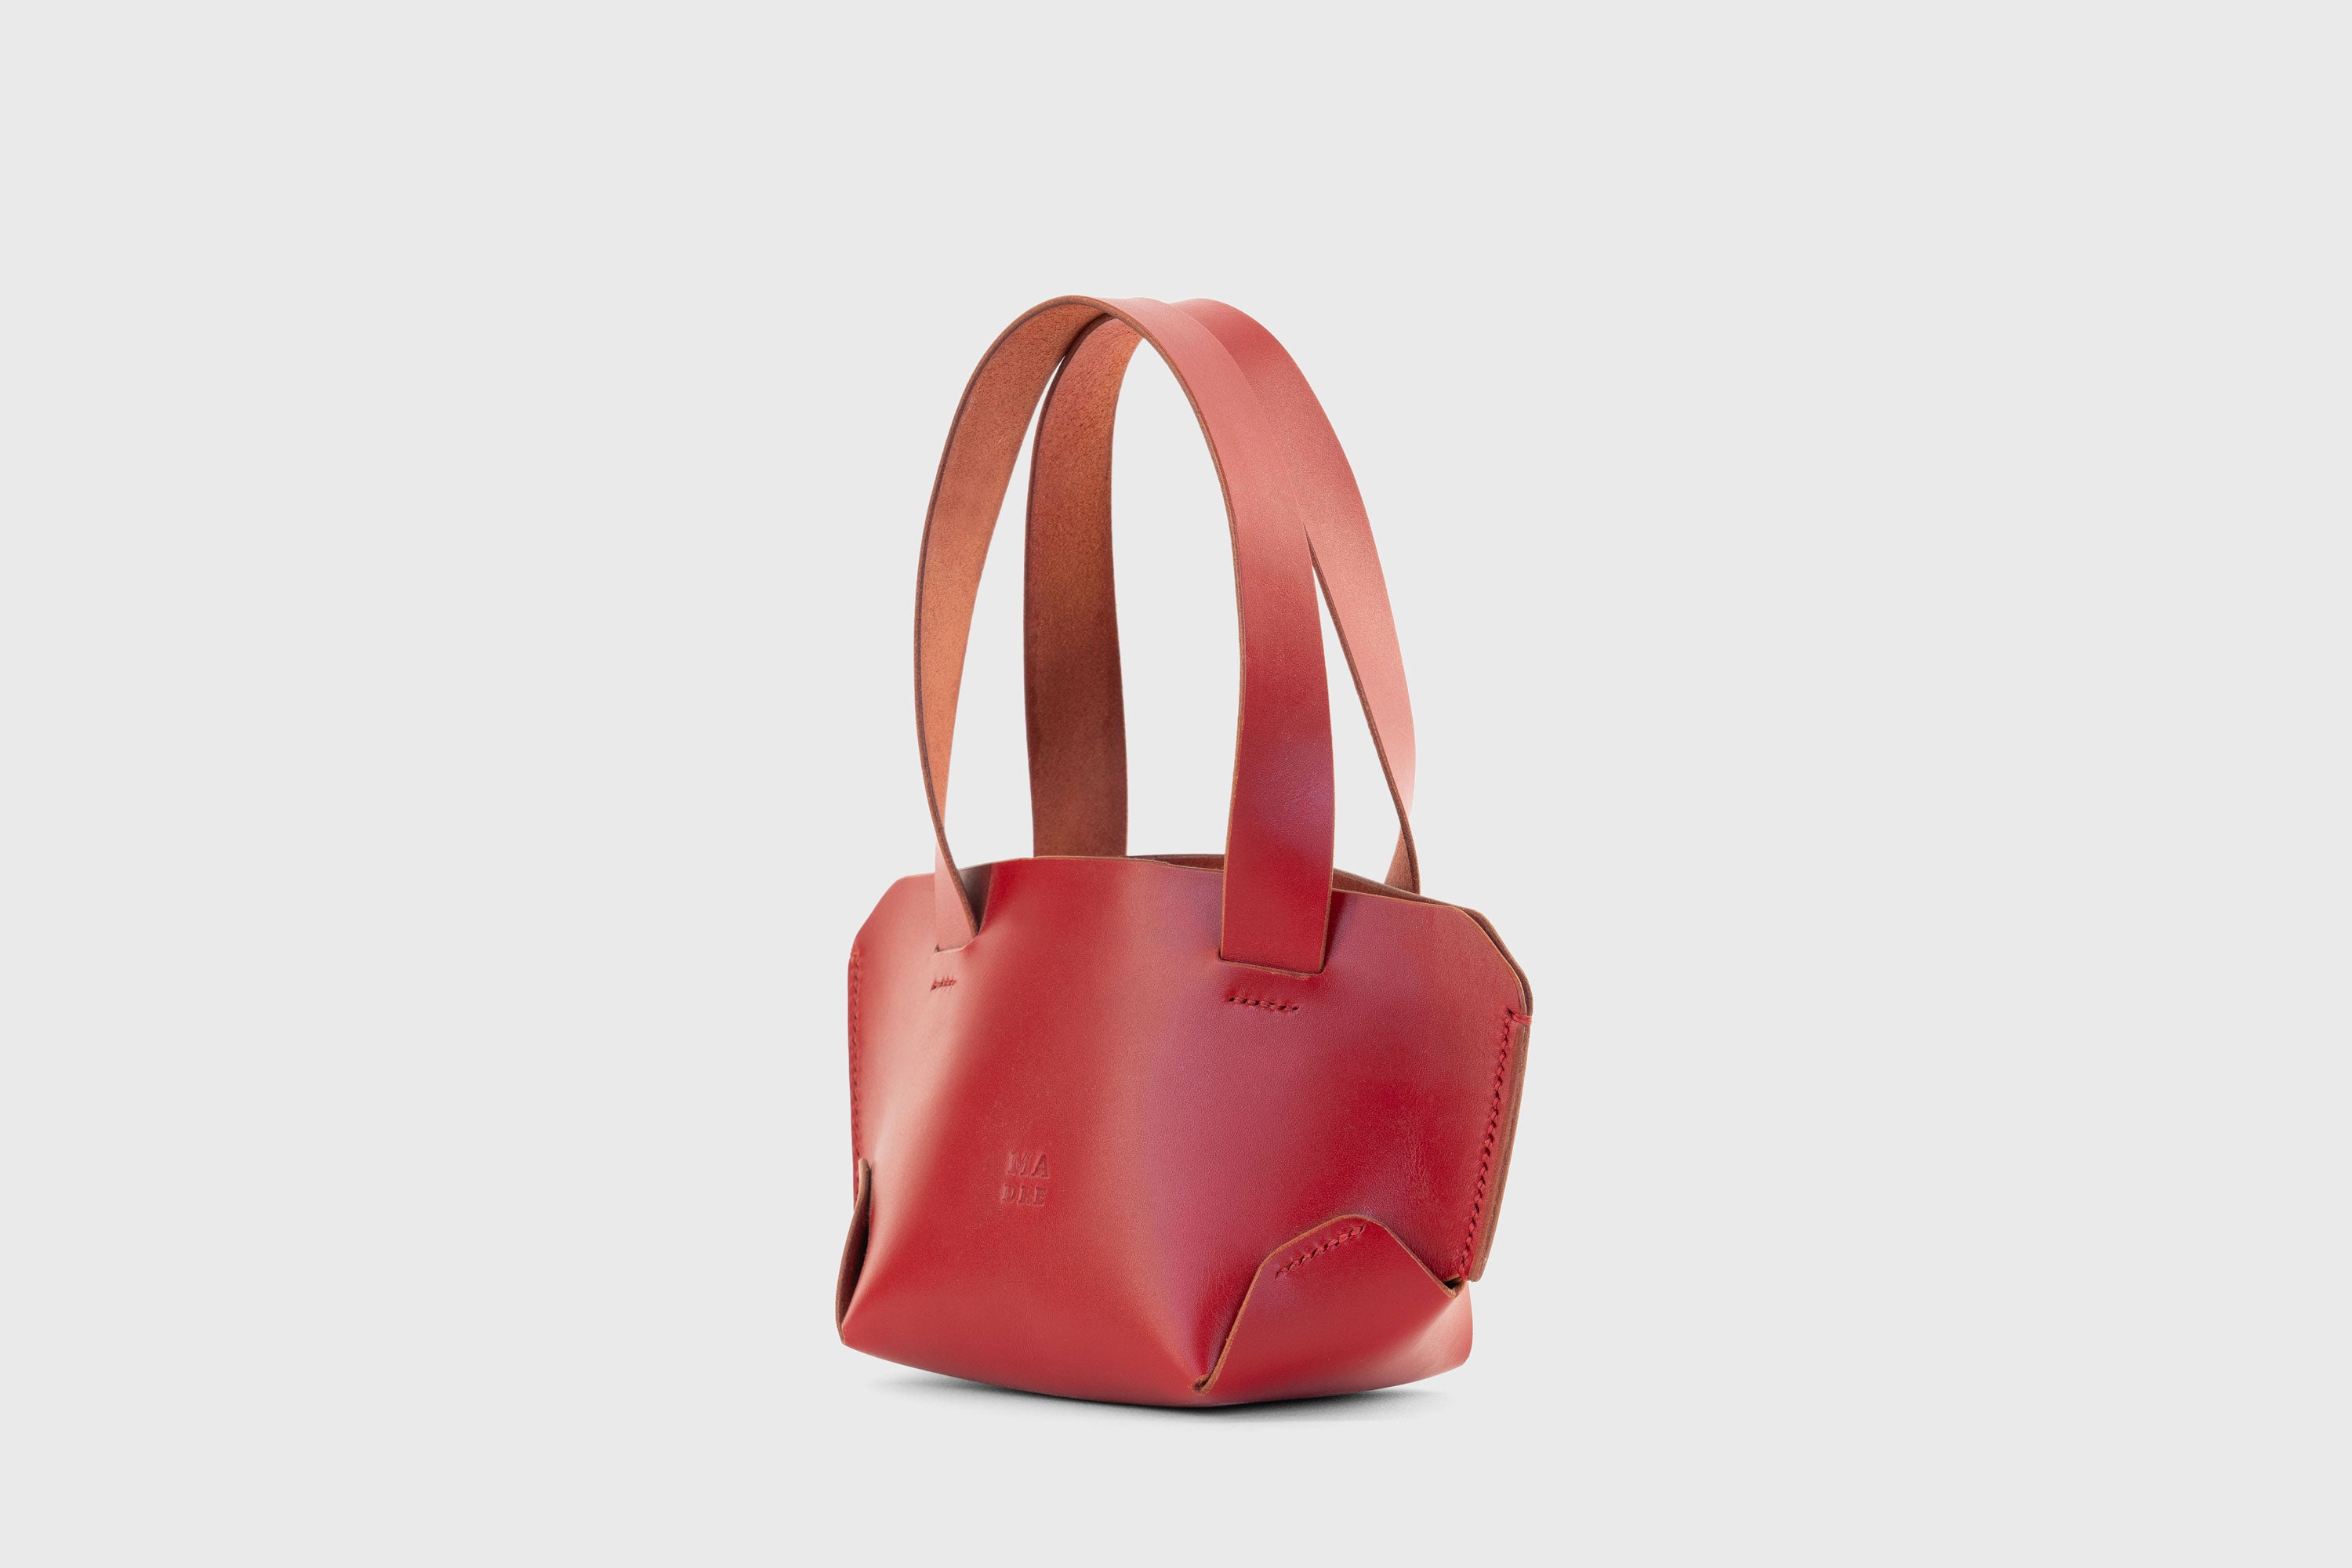 Mini Tote Bag Red Leather Handbag Small Modern Minimalist Design Premium Quality Atelier Madre Manuel Dreesmann Barcelona Spain